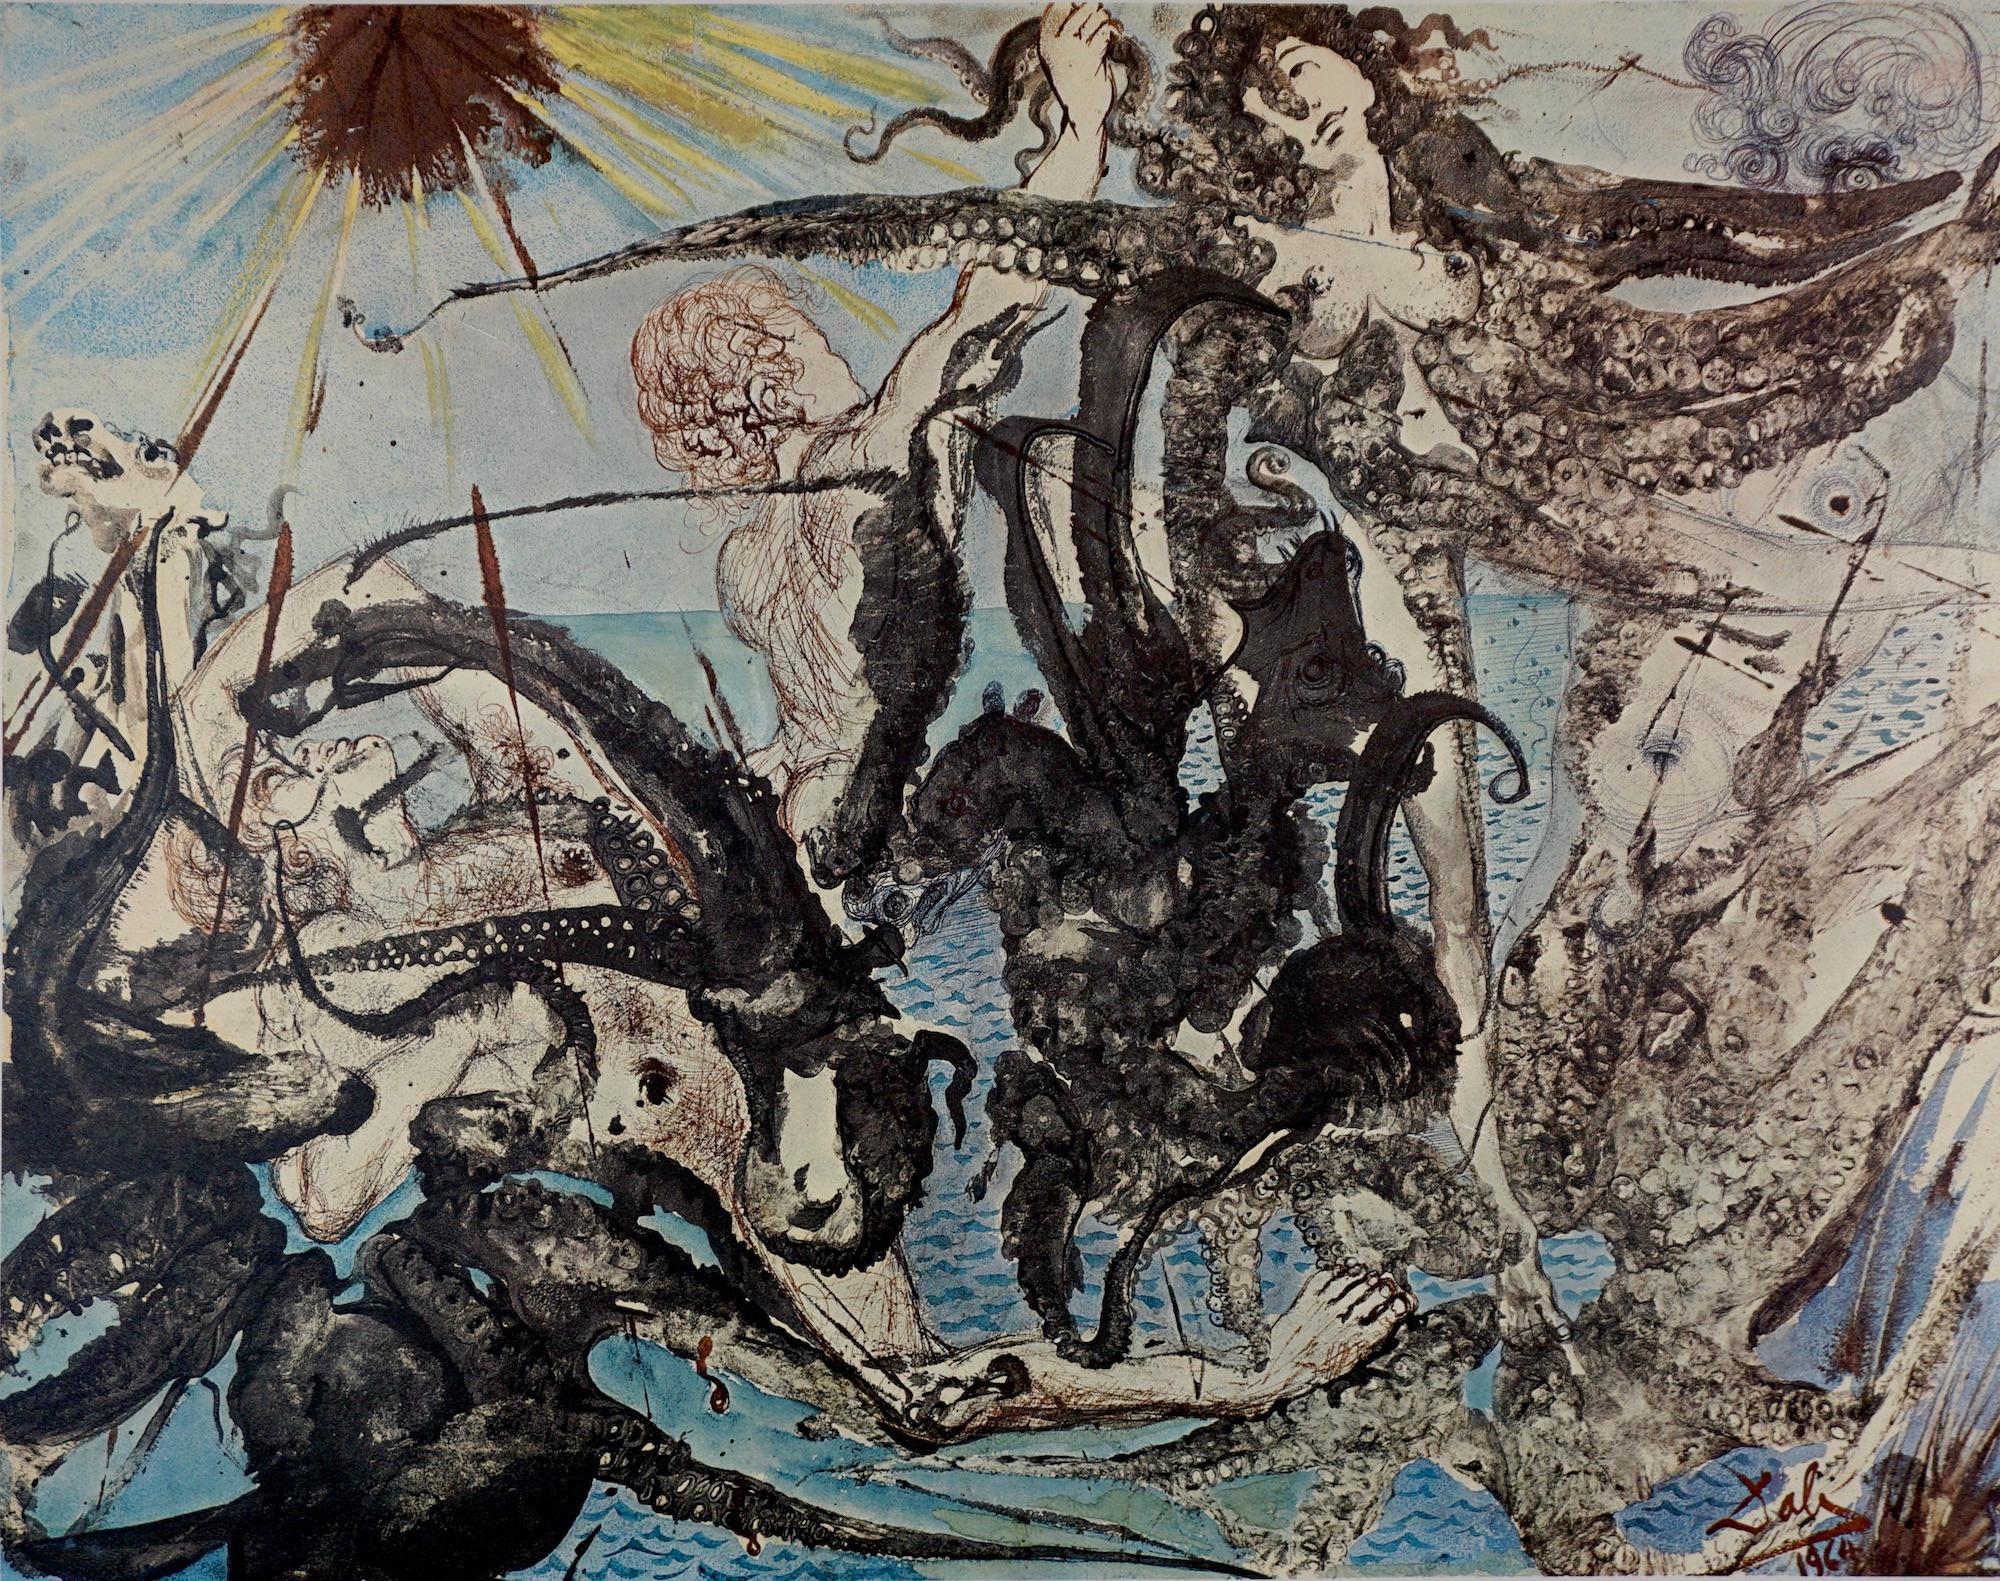 Triumph of The Sea  - Print by Salvador Dalí